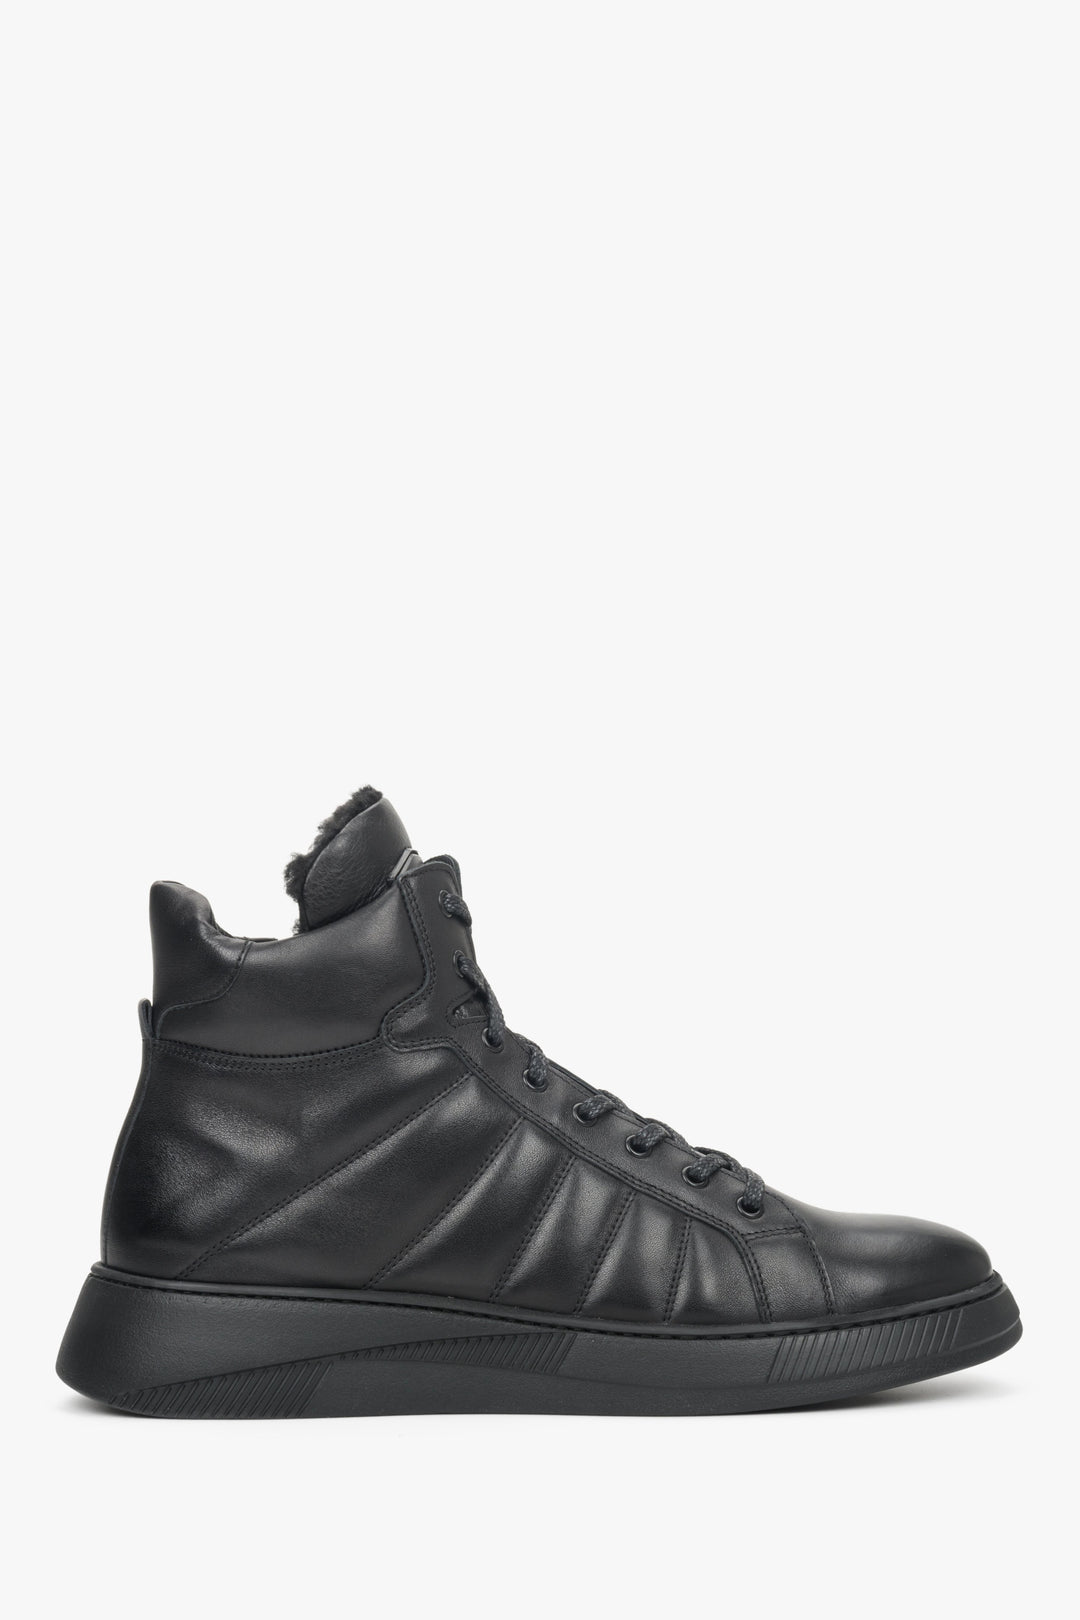 Men's black leather winter boots with laces by Estro - shoe profile.